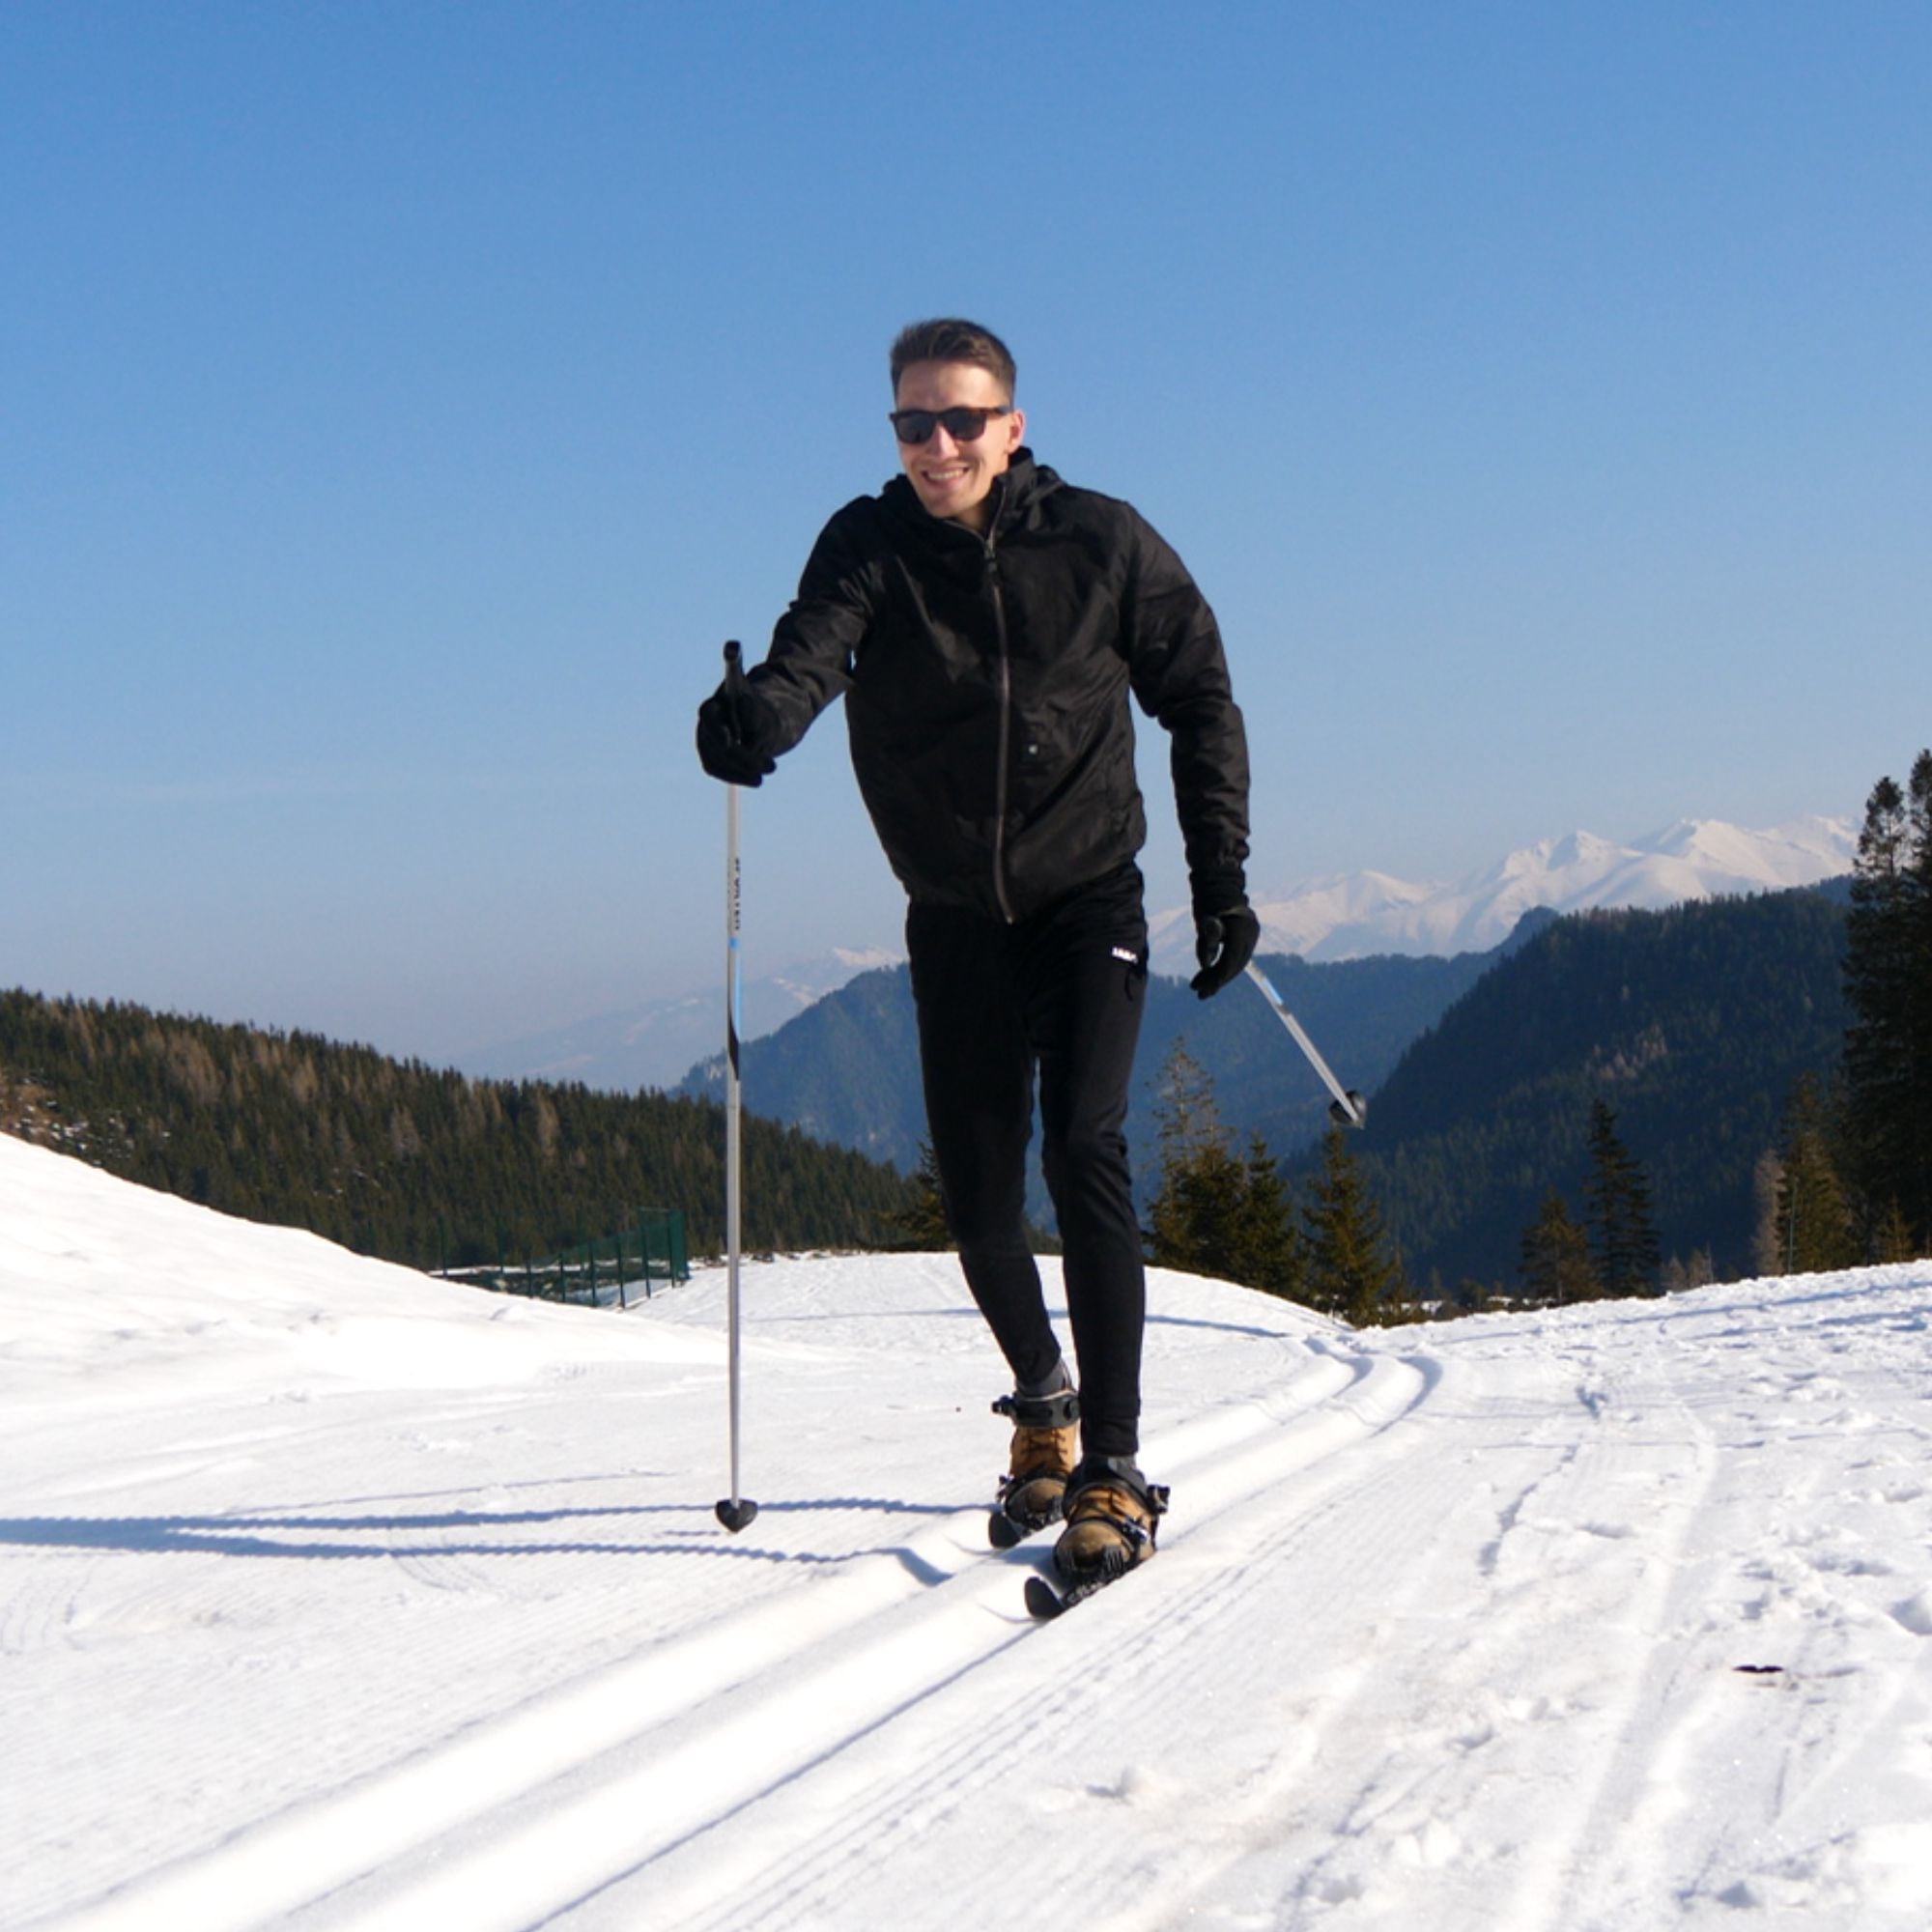 snowfeet-nordic-ski-cross-country-skating-short-ski-90cm